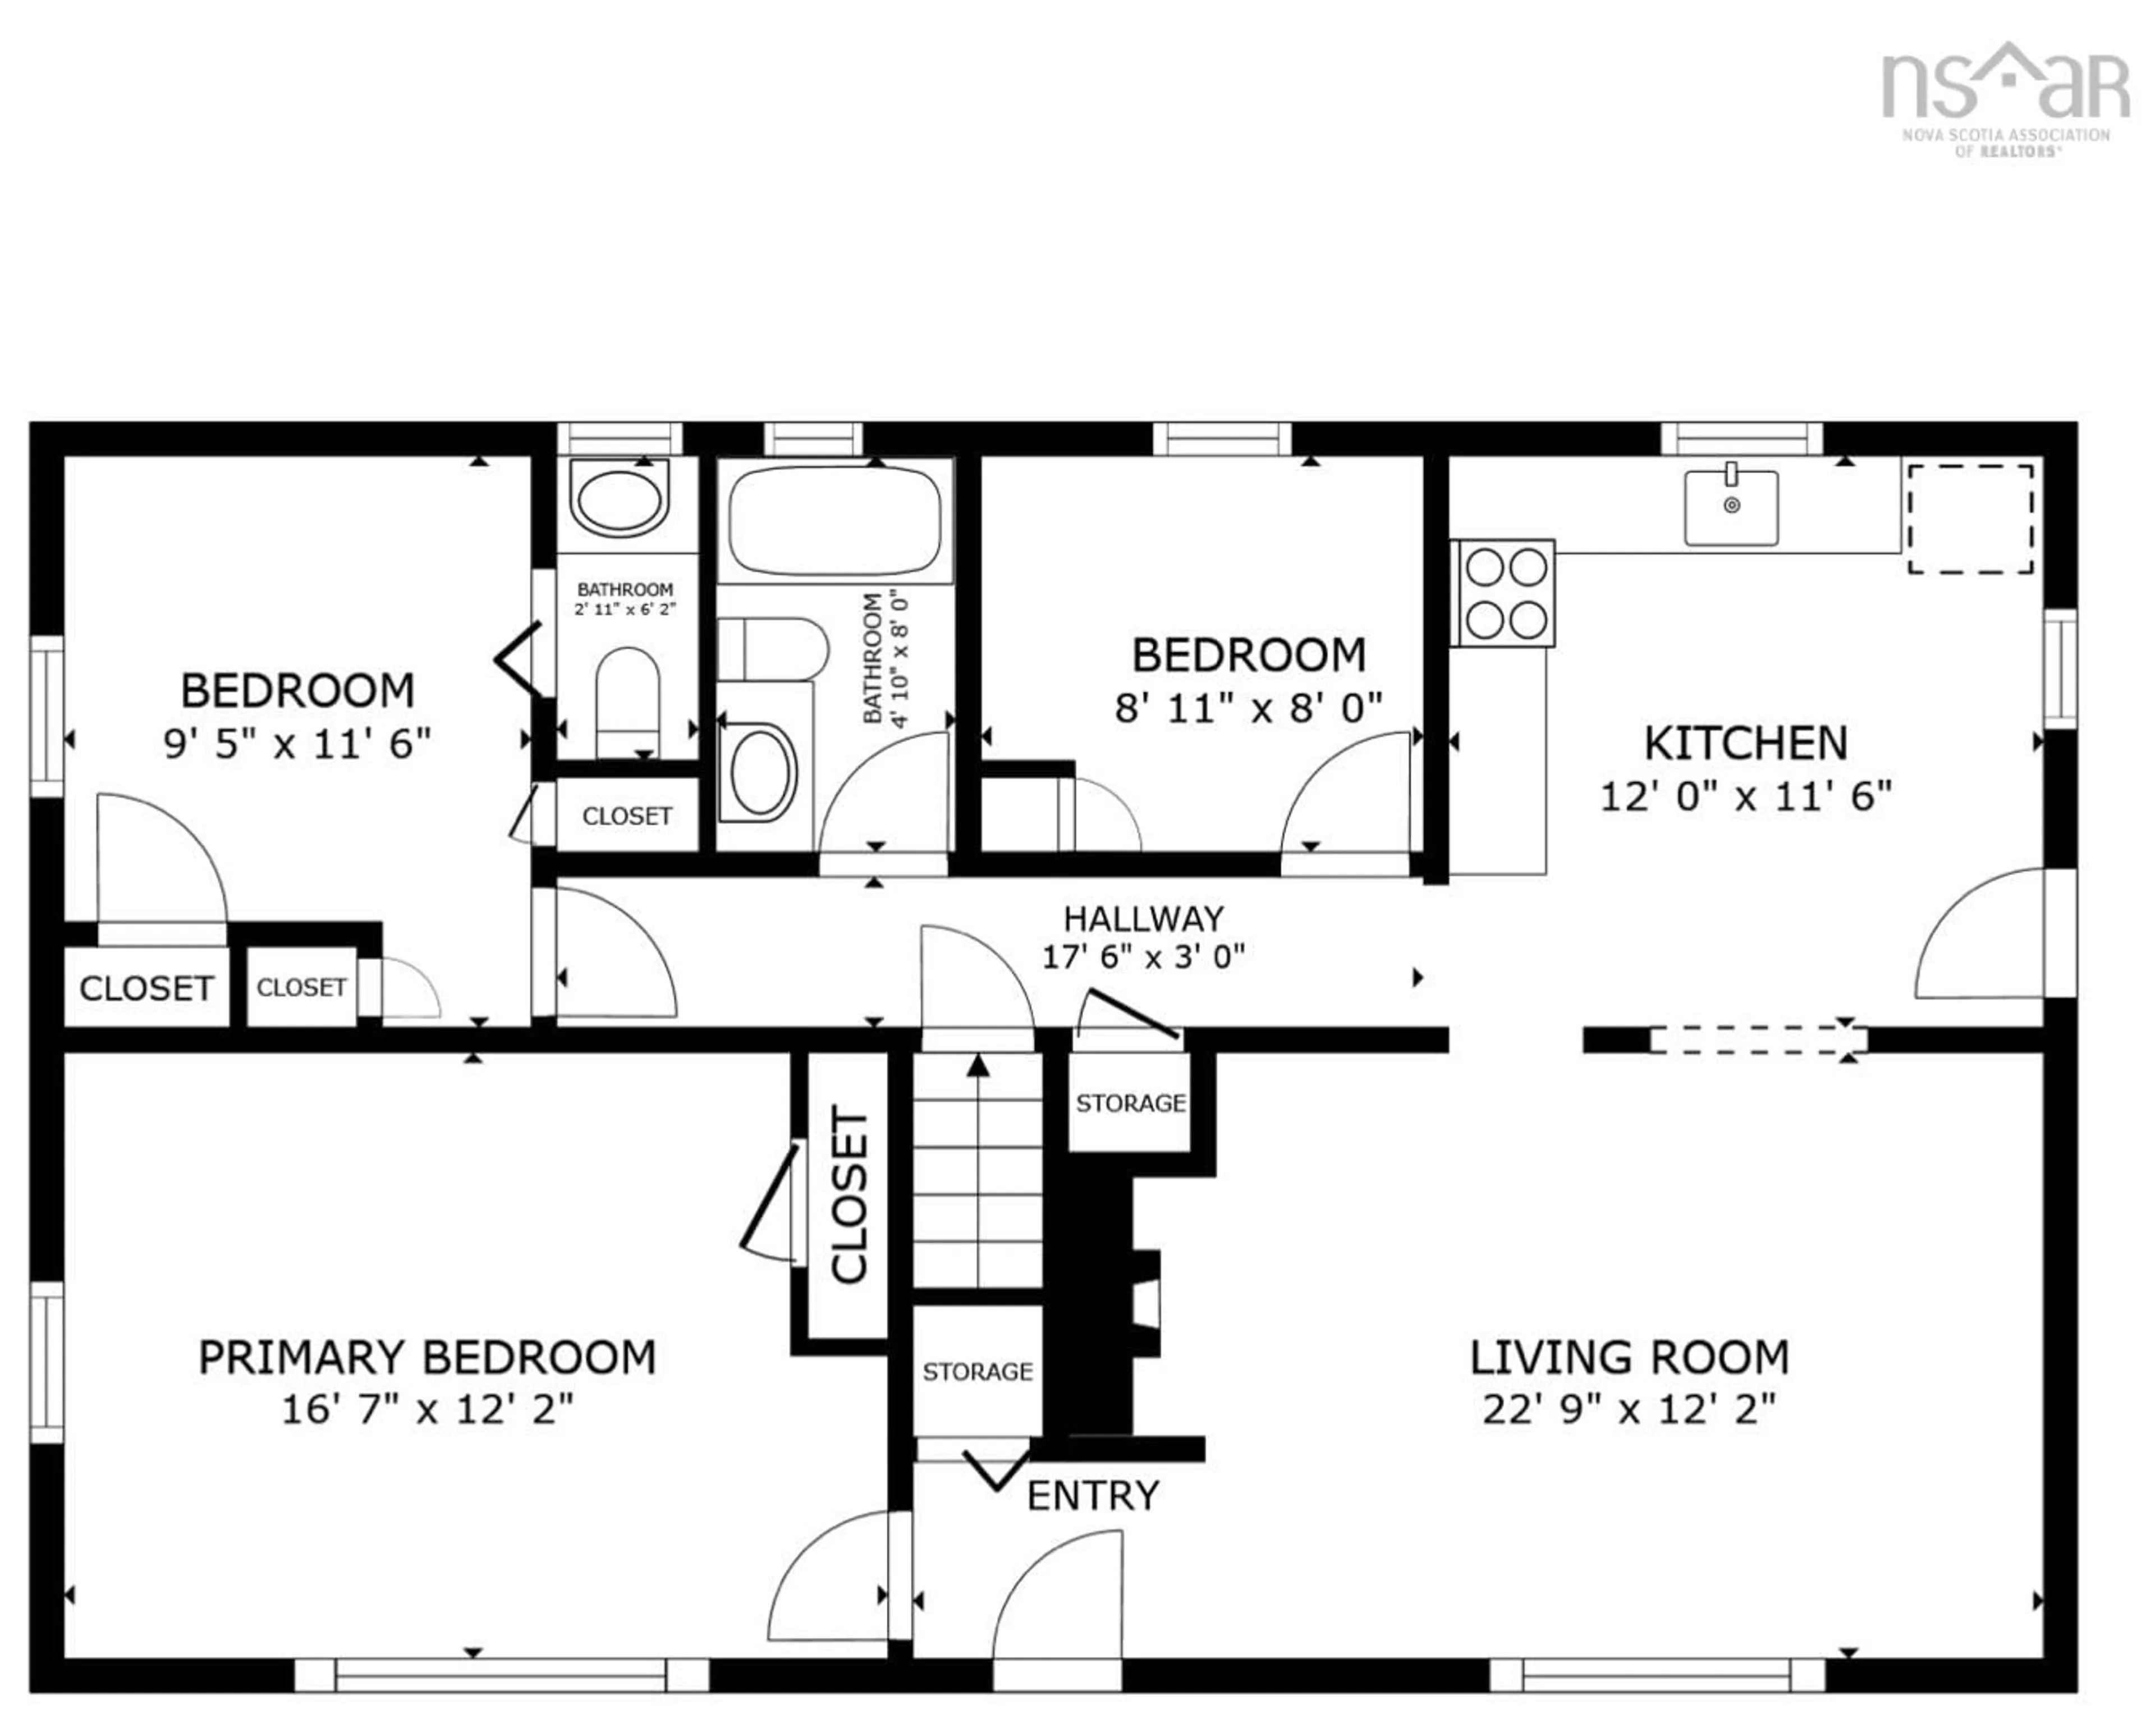 Floor plan for 1624 Valley Rd, Wentworth Nova Scotia B0M 1Z0